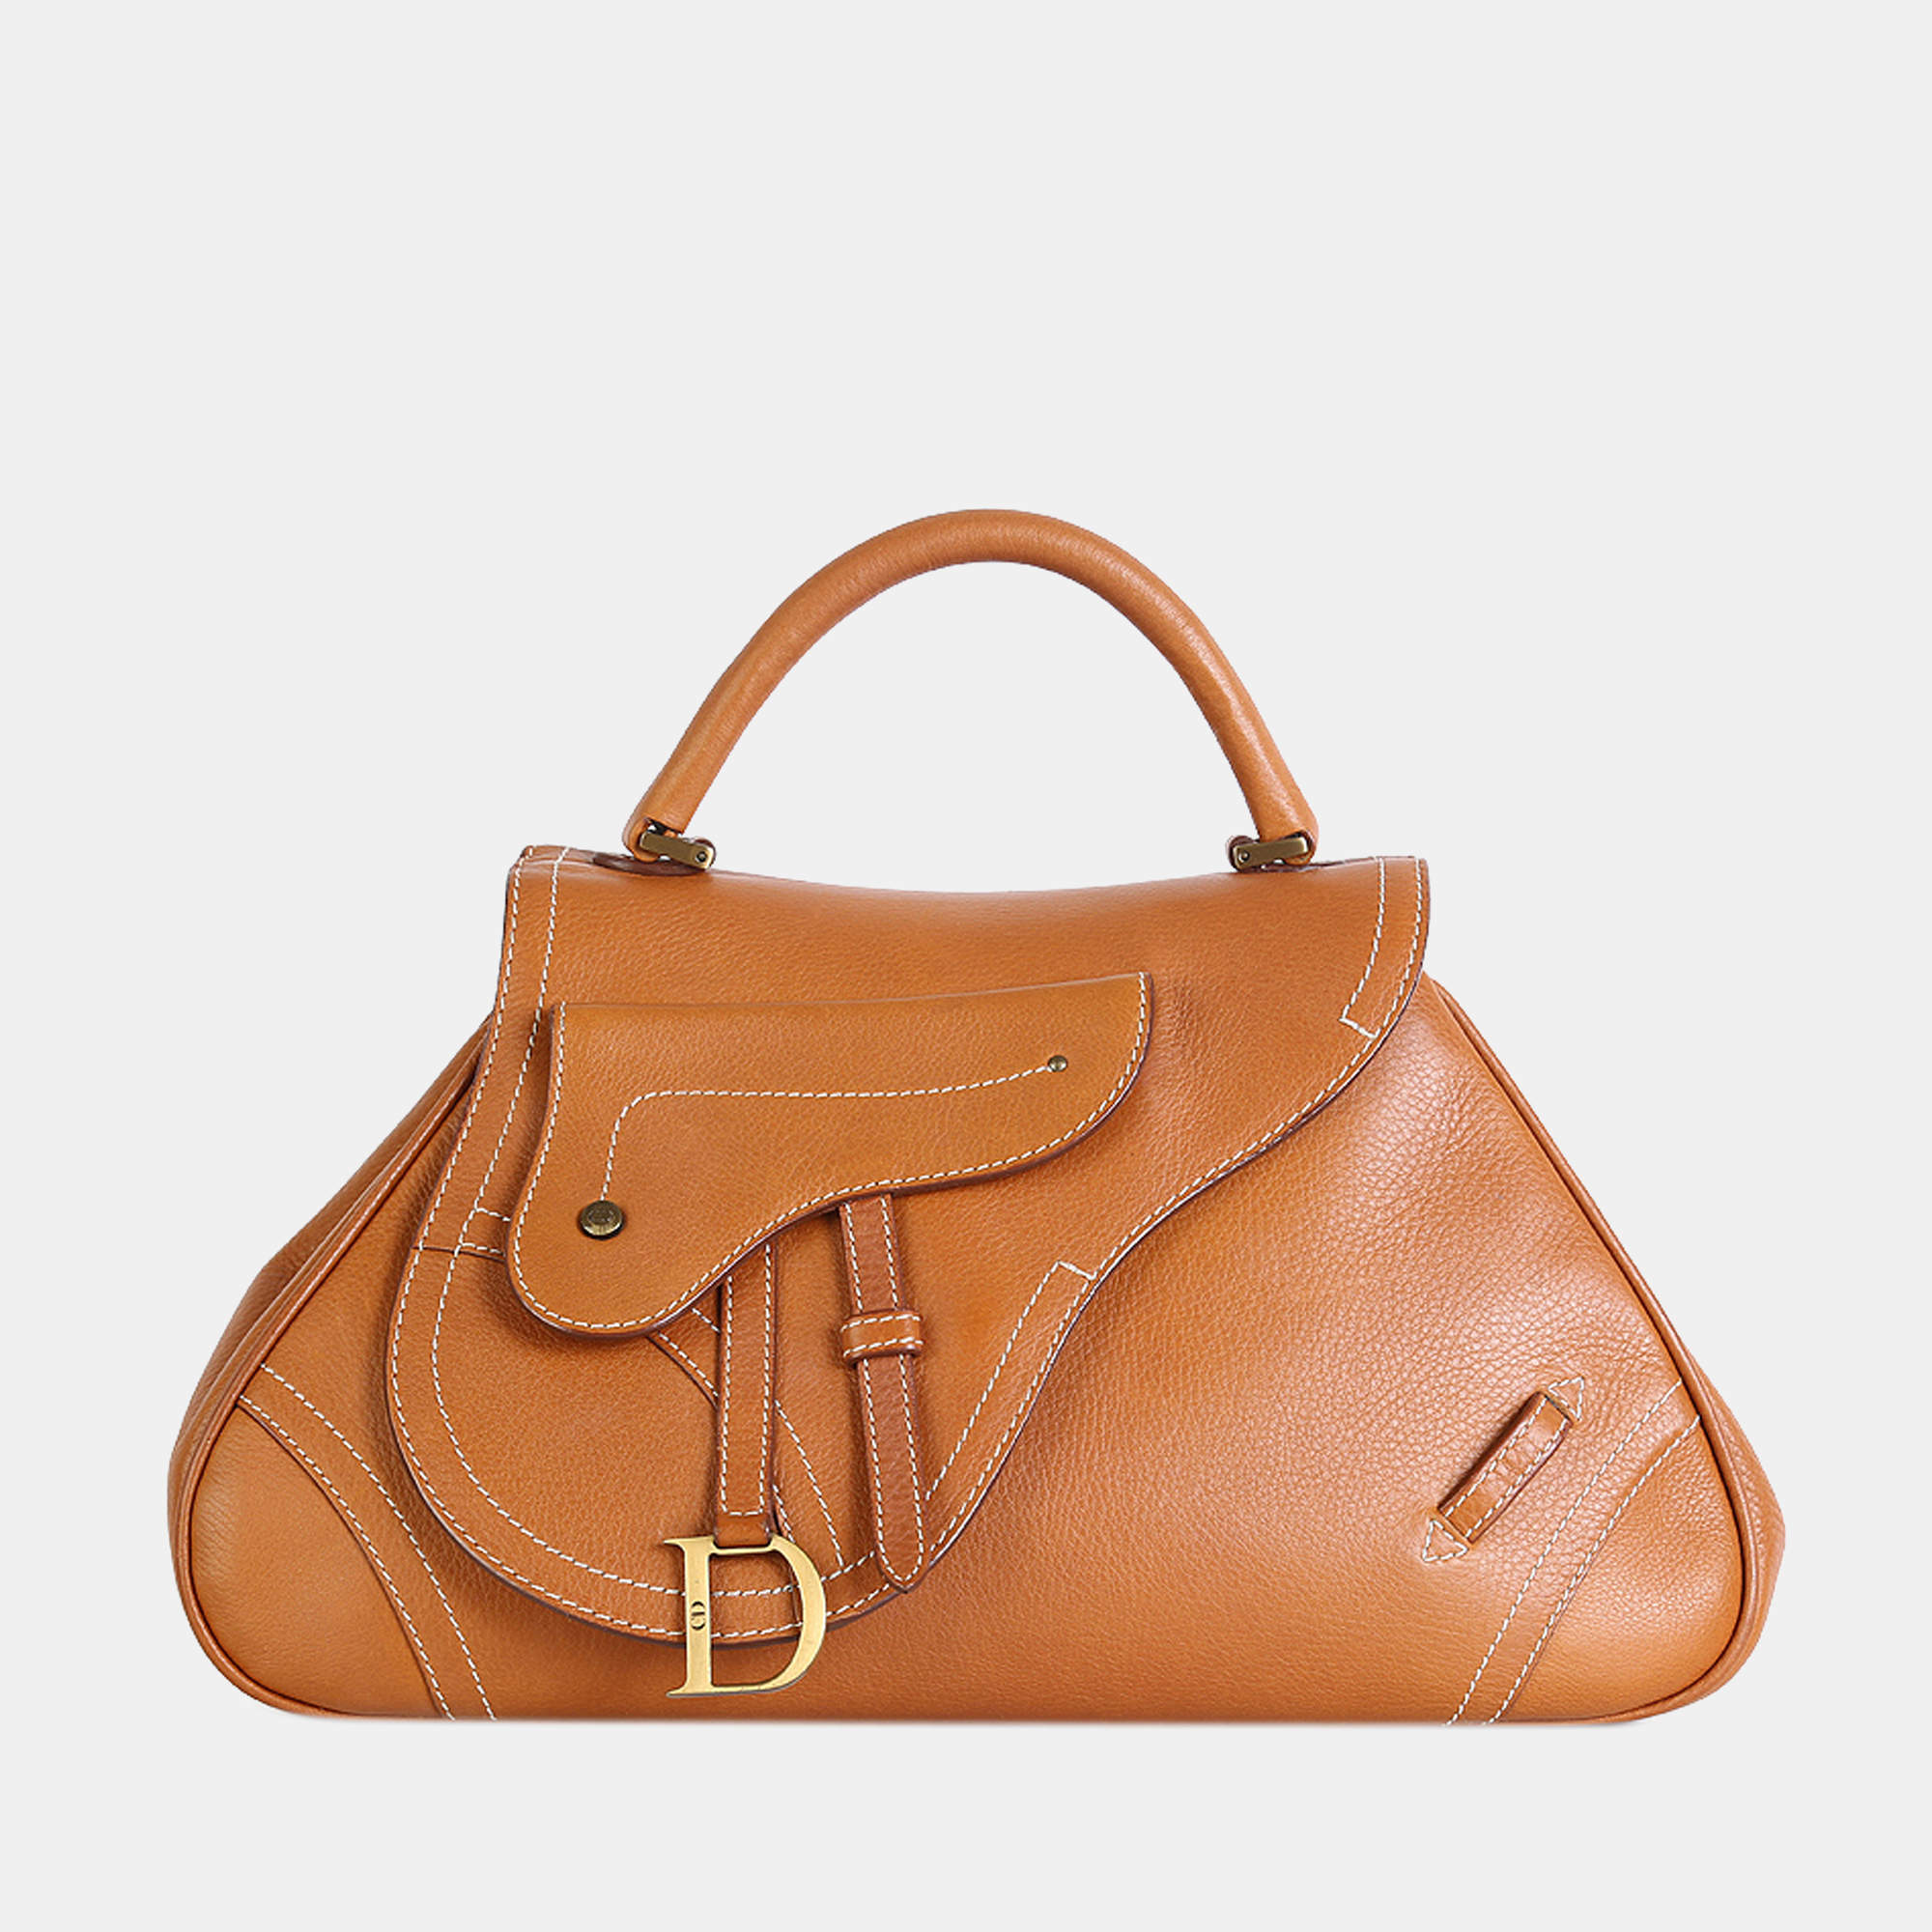 Christian Dior vintage brown leather satchel bag  1990s second hand Lysis